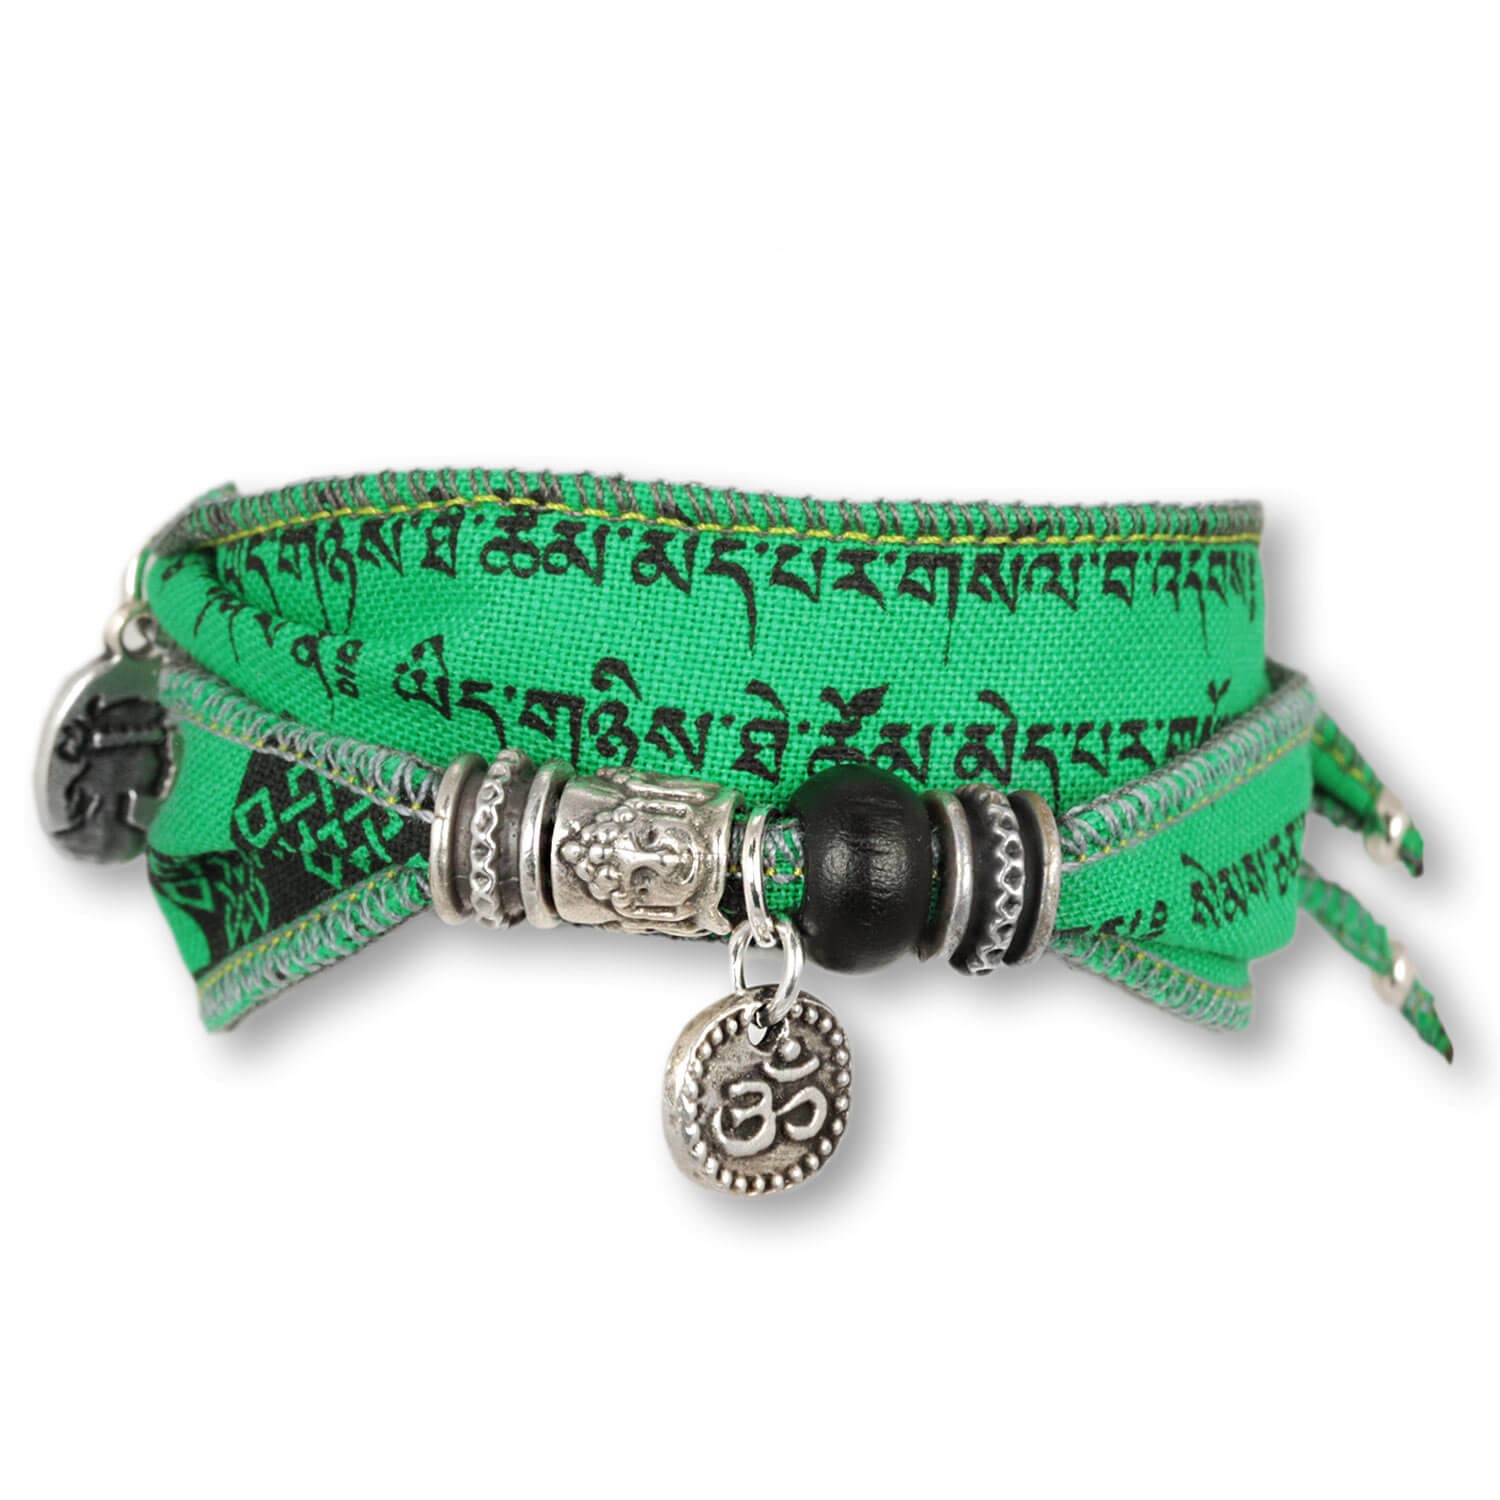 Water Mantra - Tibetan Wish bracelet made from Tibetan prayer flags